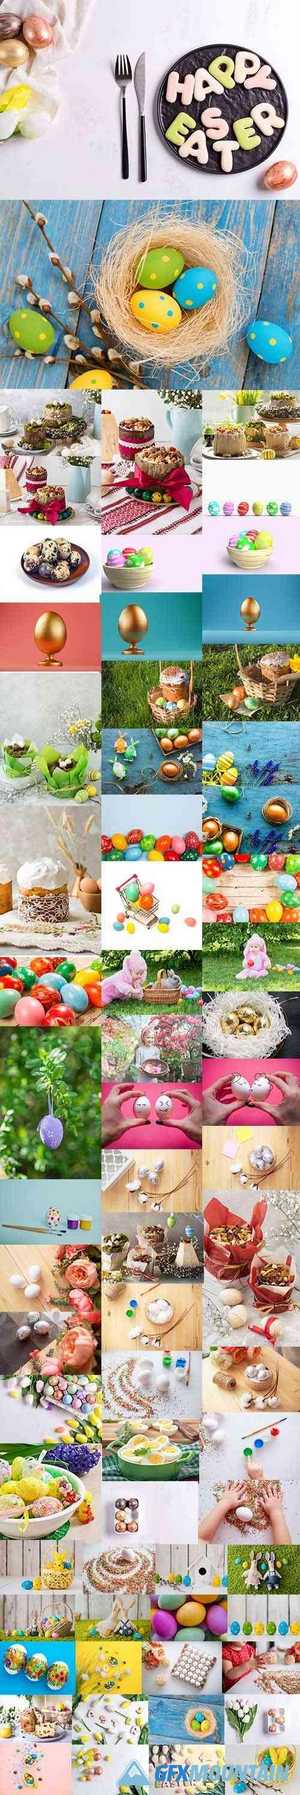 Happy Easter Holiday Photo Bundle 